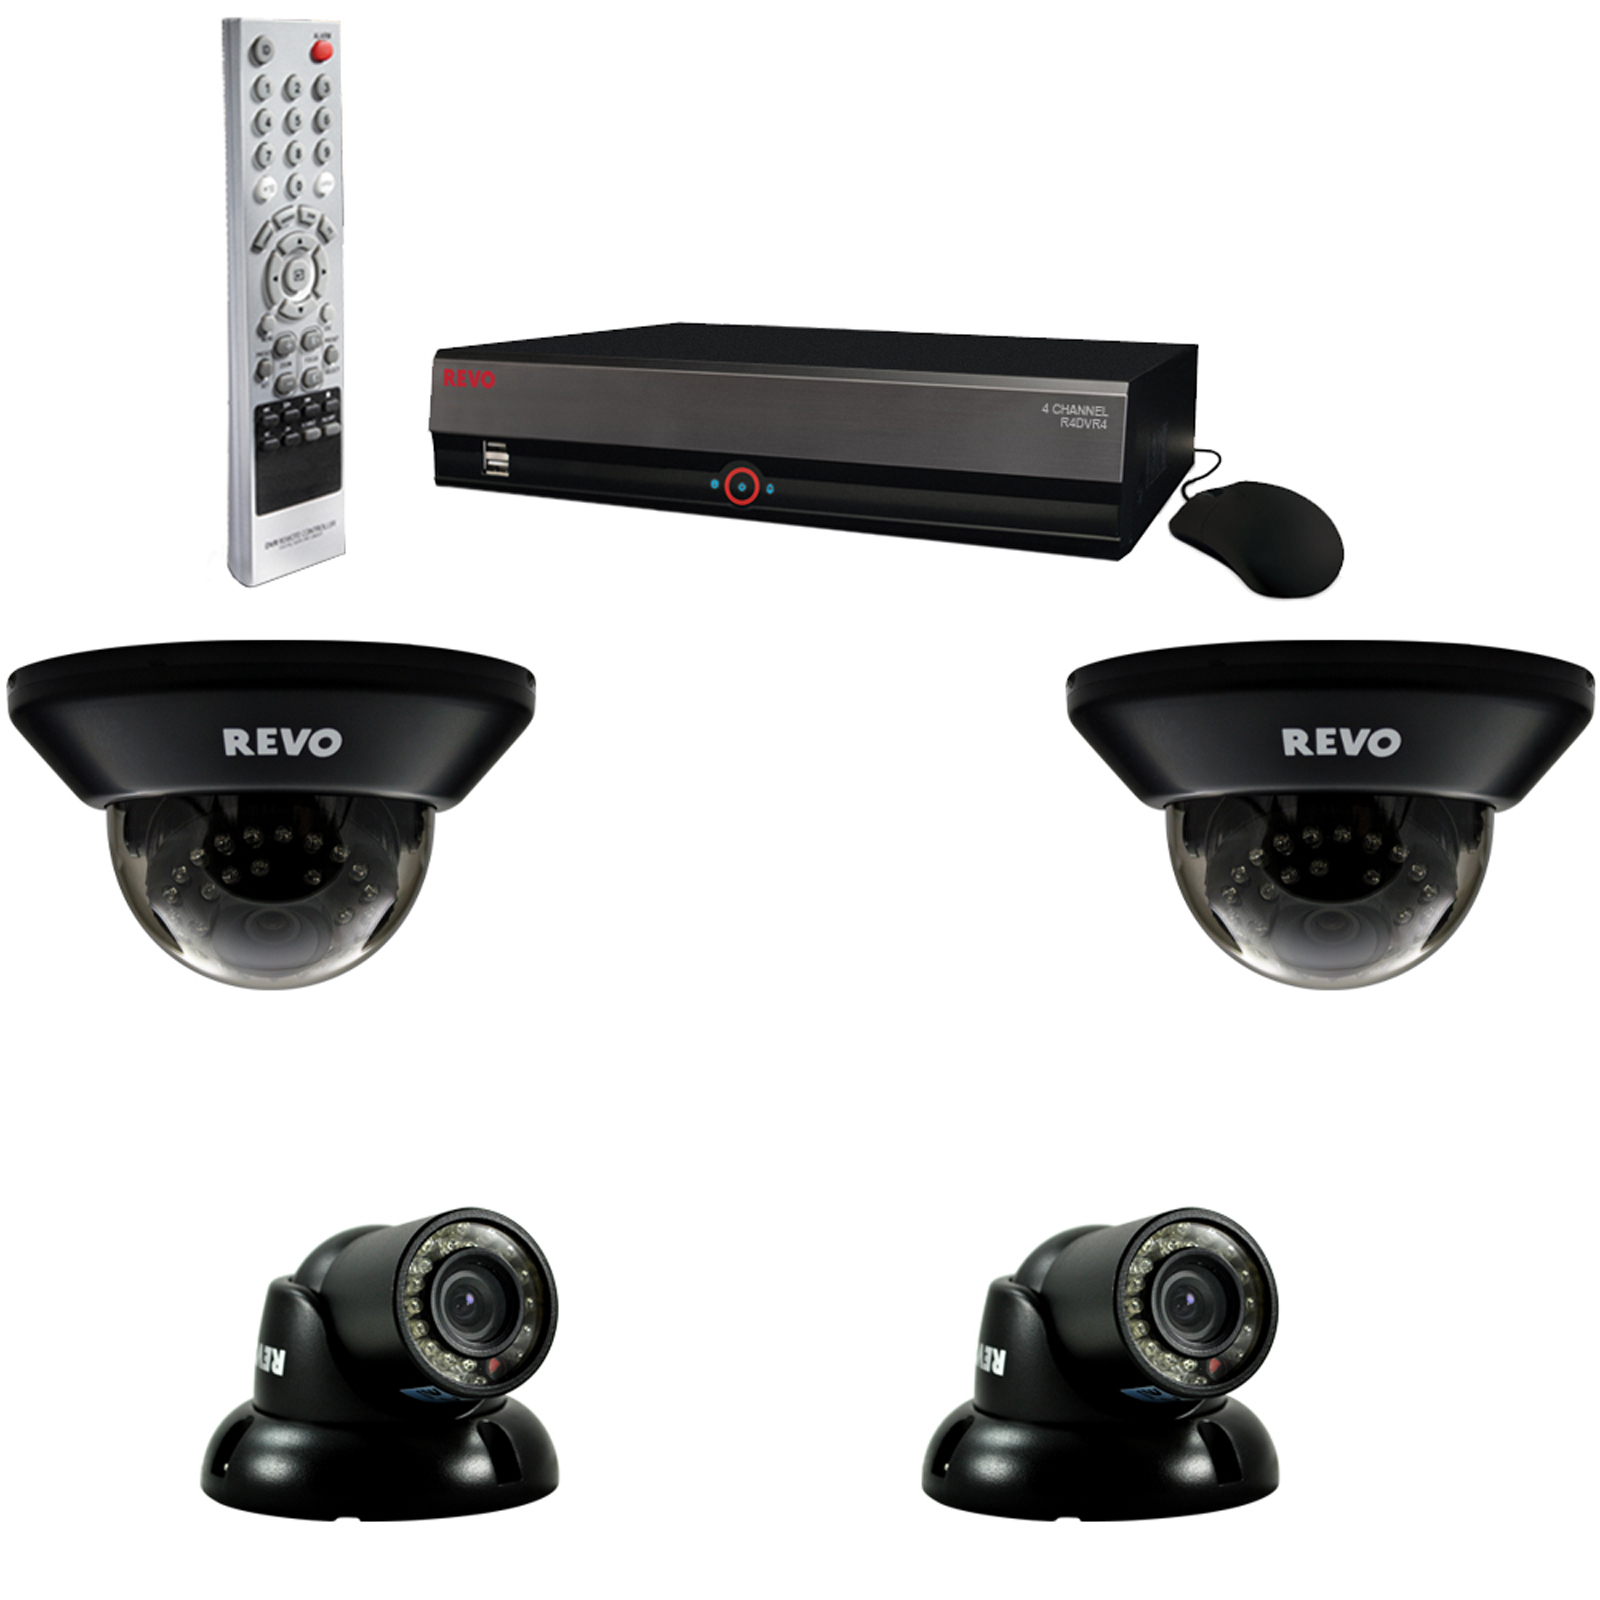 4 Ch. 500GB DVR Surveillance System with 4 700TVL 100 ft. Night Vision Cameras